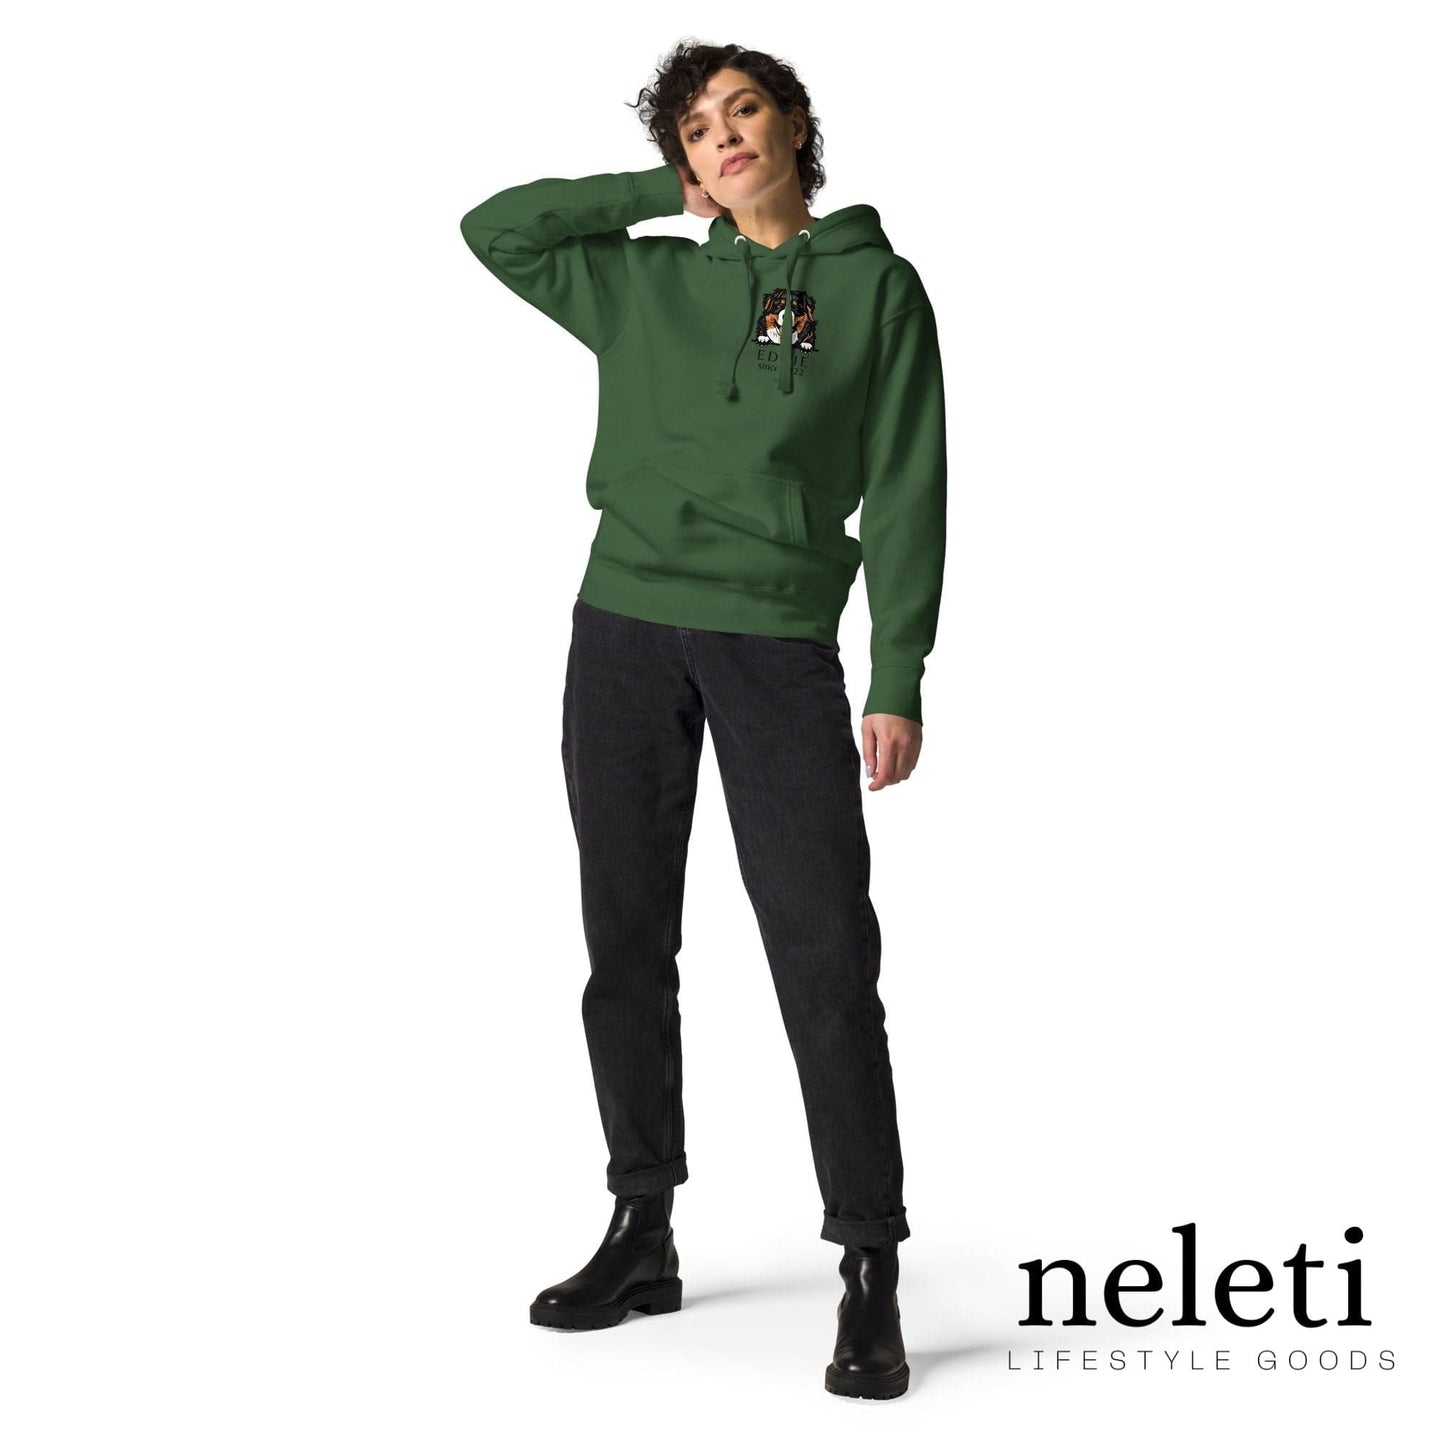 neleti.com-custom-forest-green-hoodie-for-dog-lovers